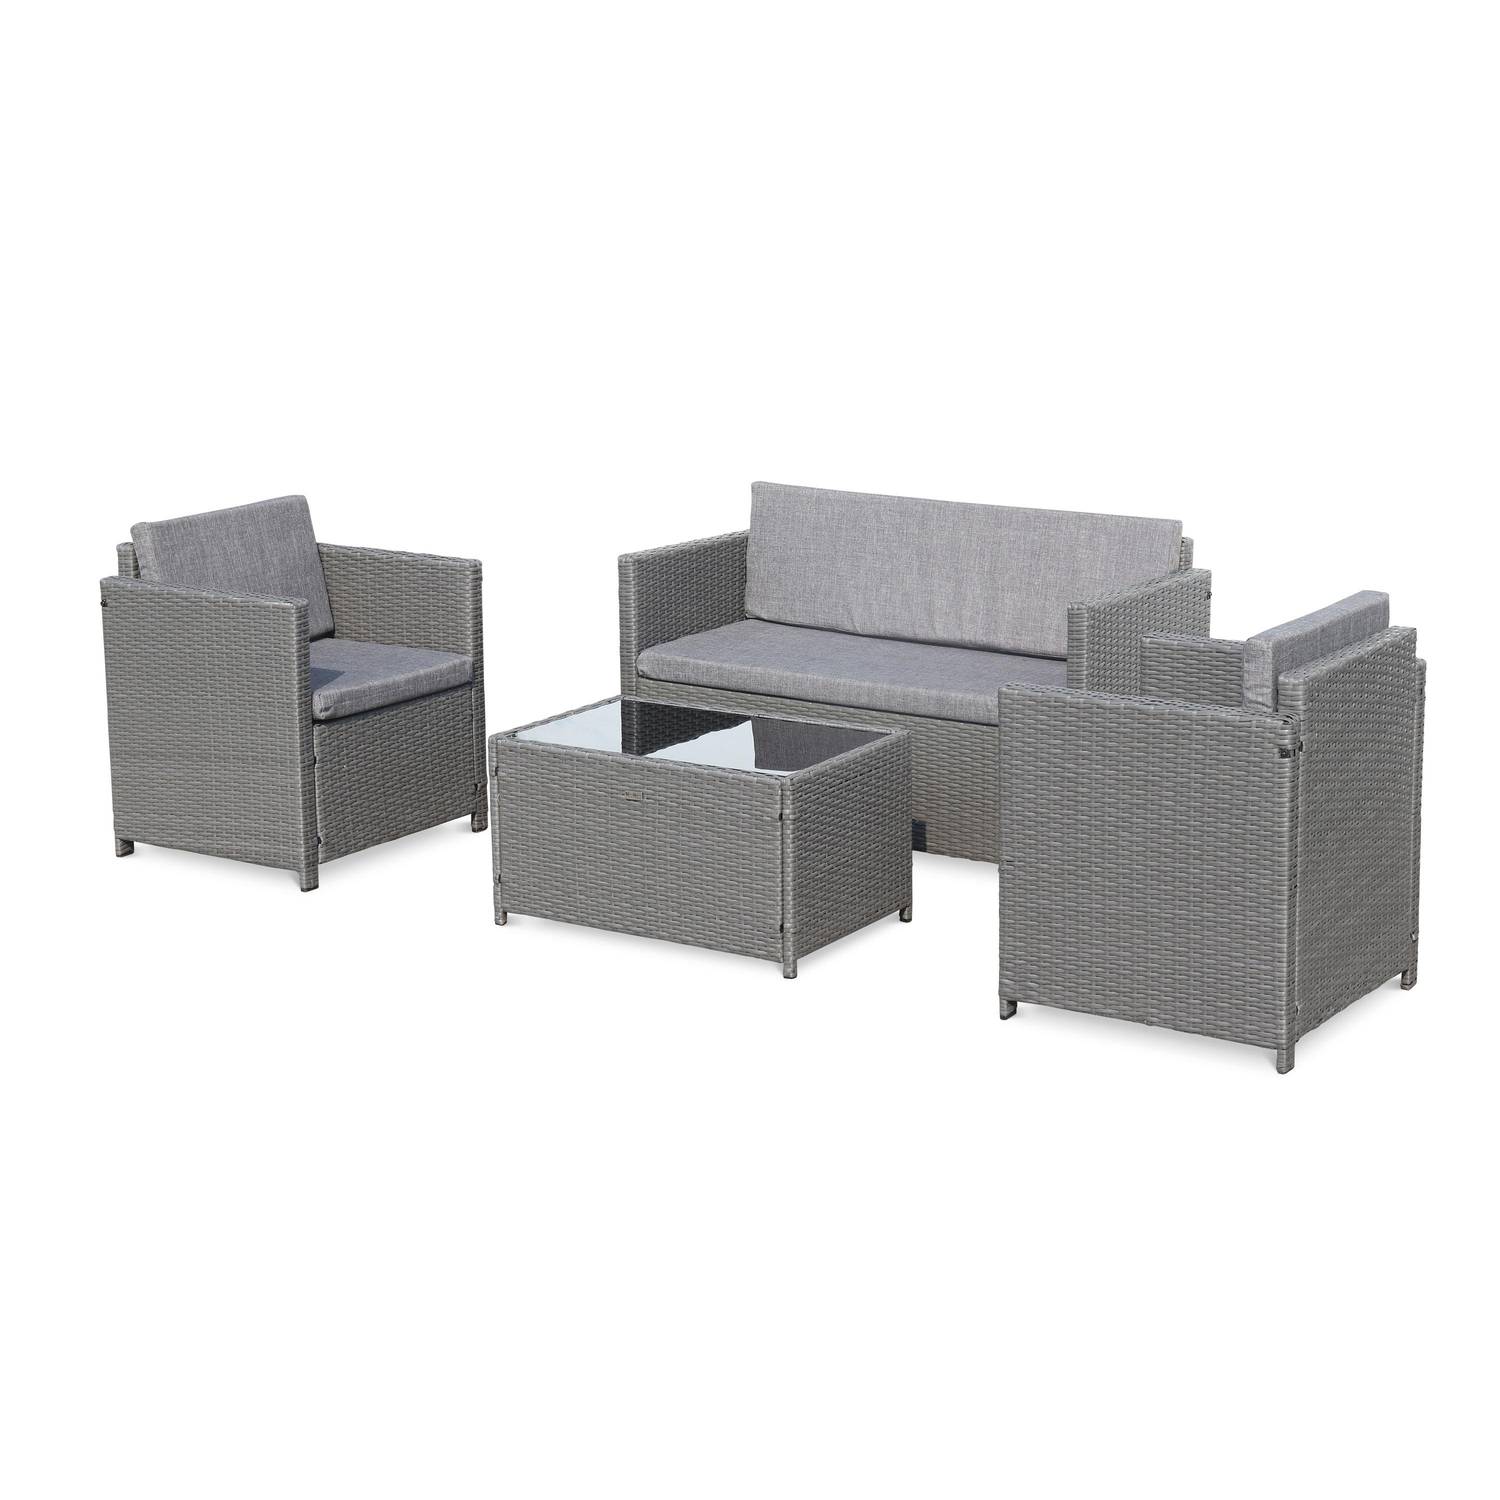 4-seater polyrattan garden sofa set - sofa, 2 armchairs, coffee table - Perugia - Grey rattan, Grey cushions Photo2